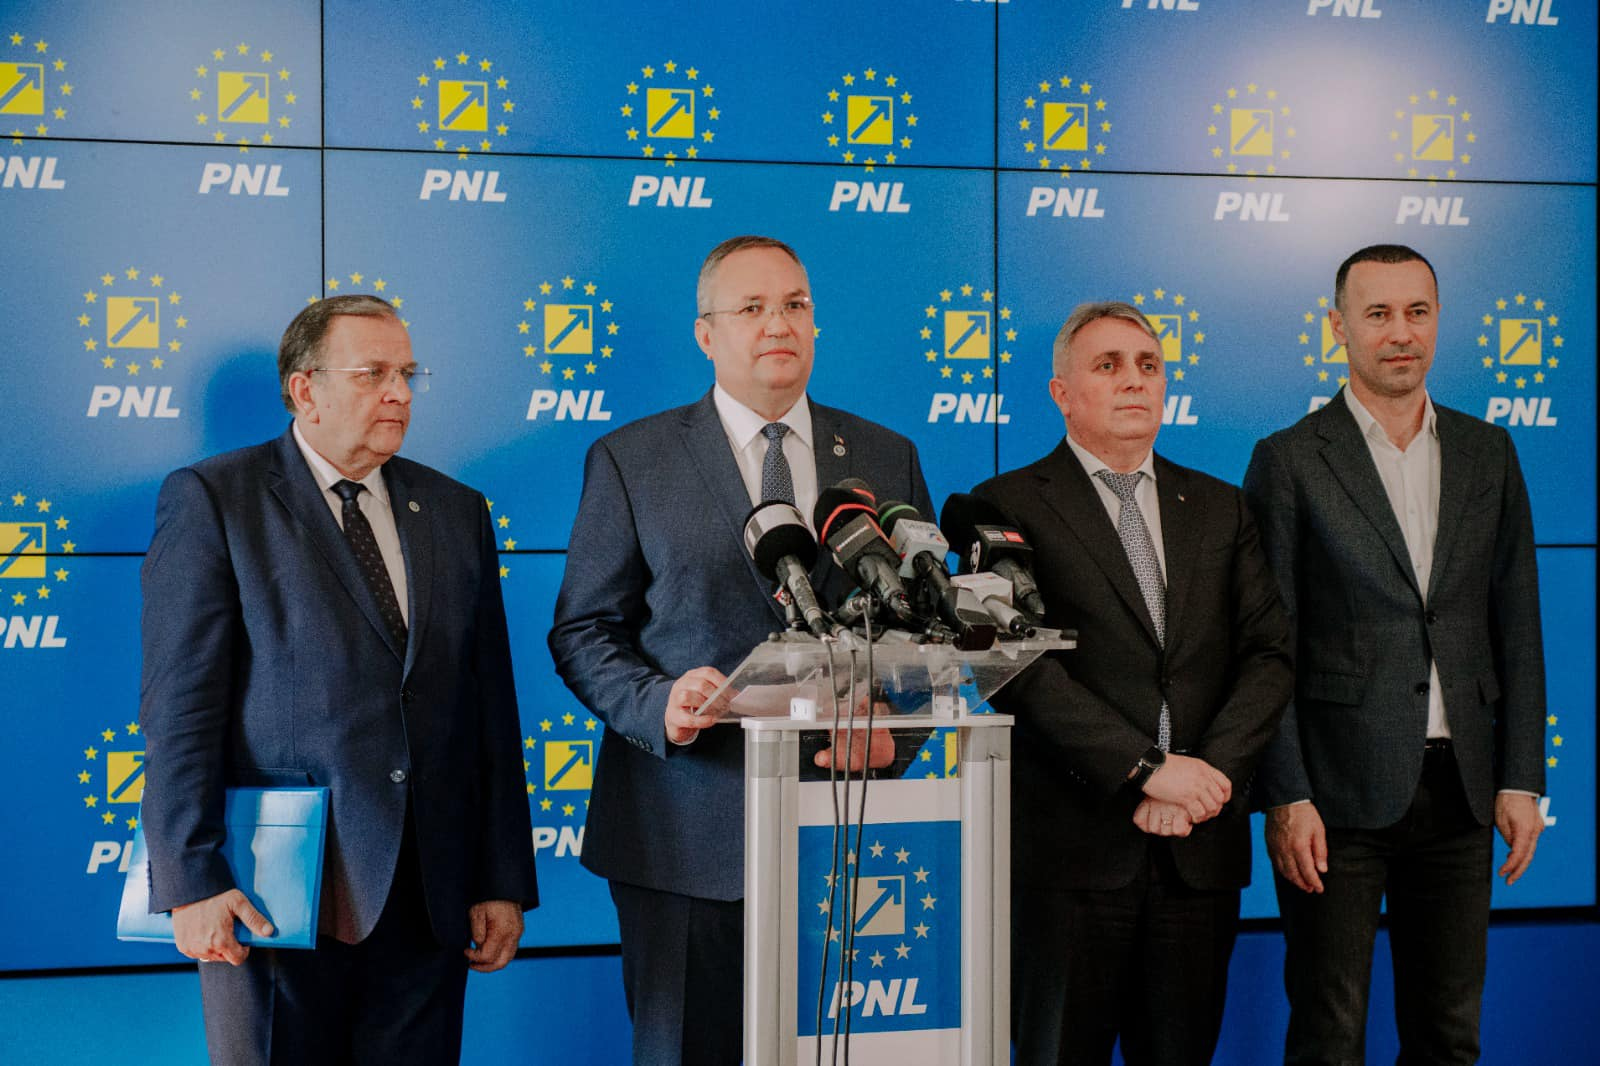 Indul a PNL pártelnöki tisztségéért Nicolae Ciucă